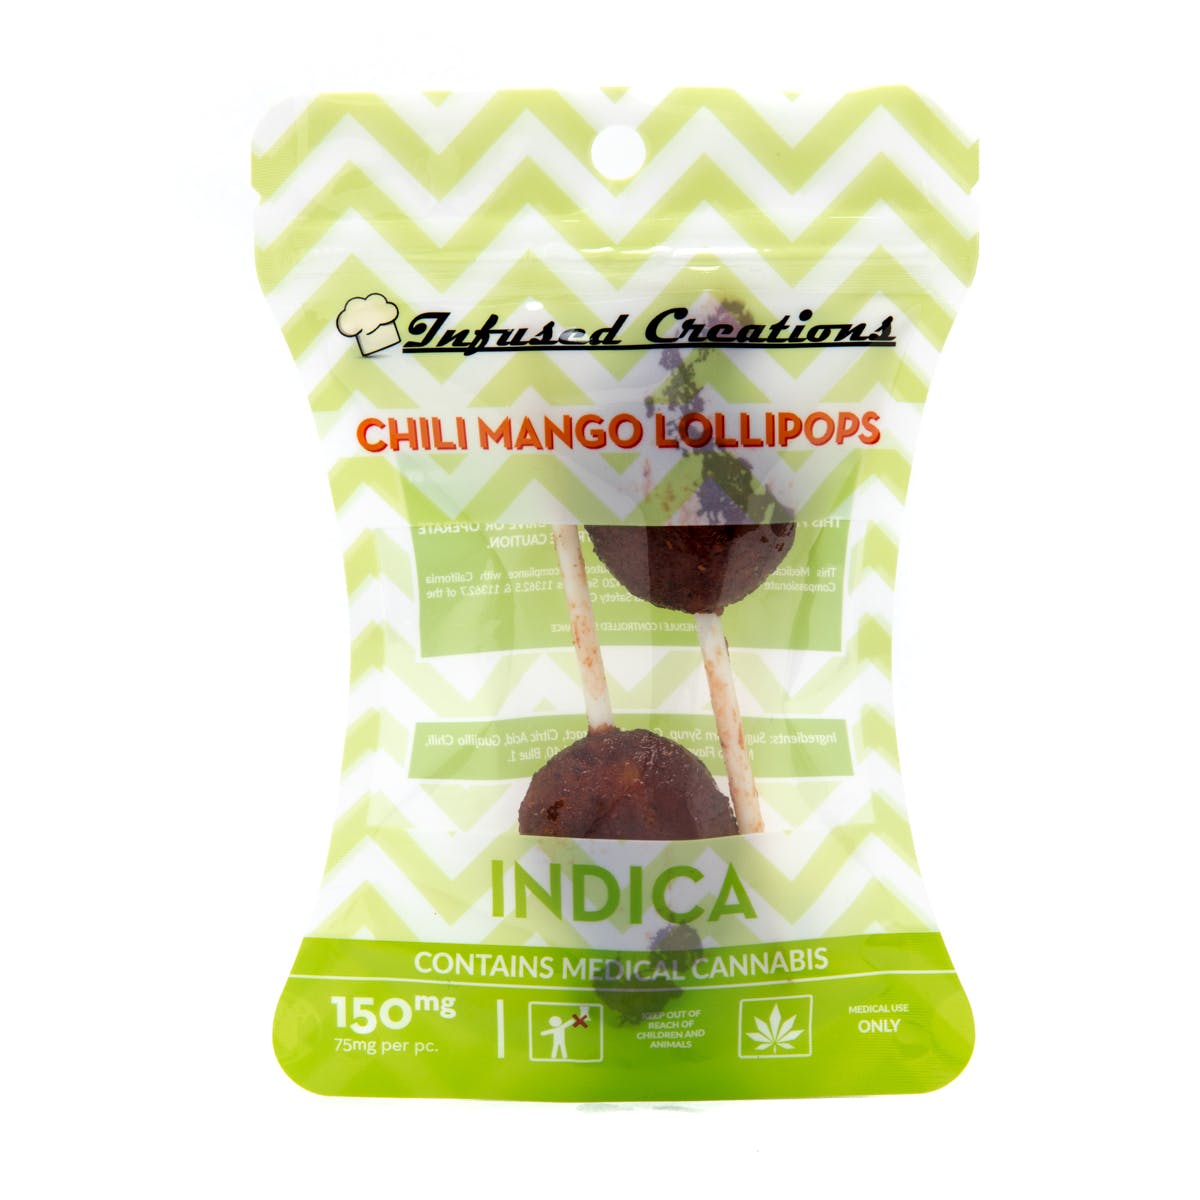 Chili Mango Lollipops Sativa, 150mg